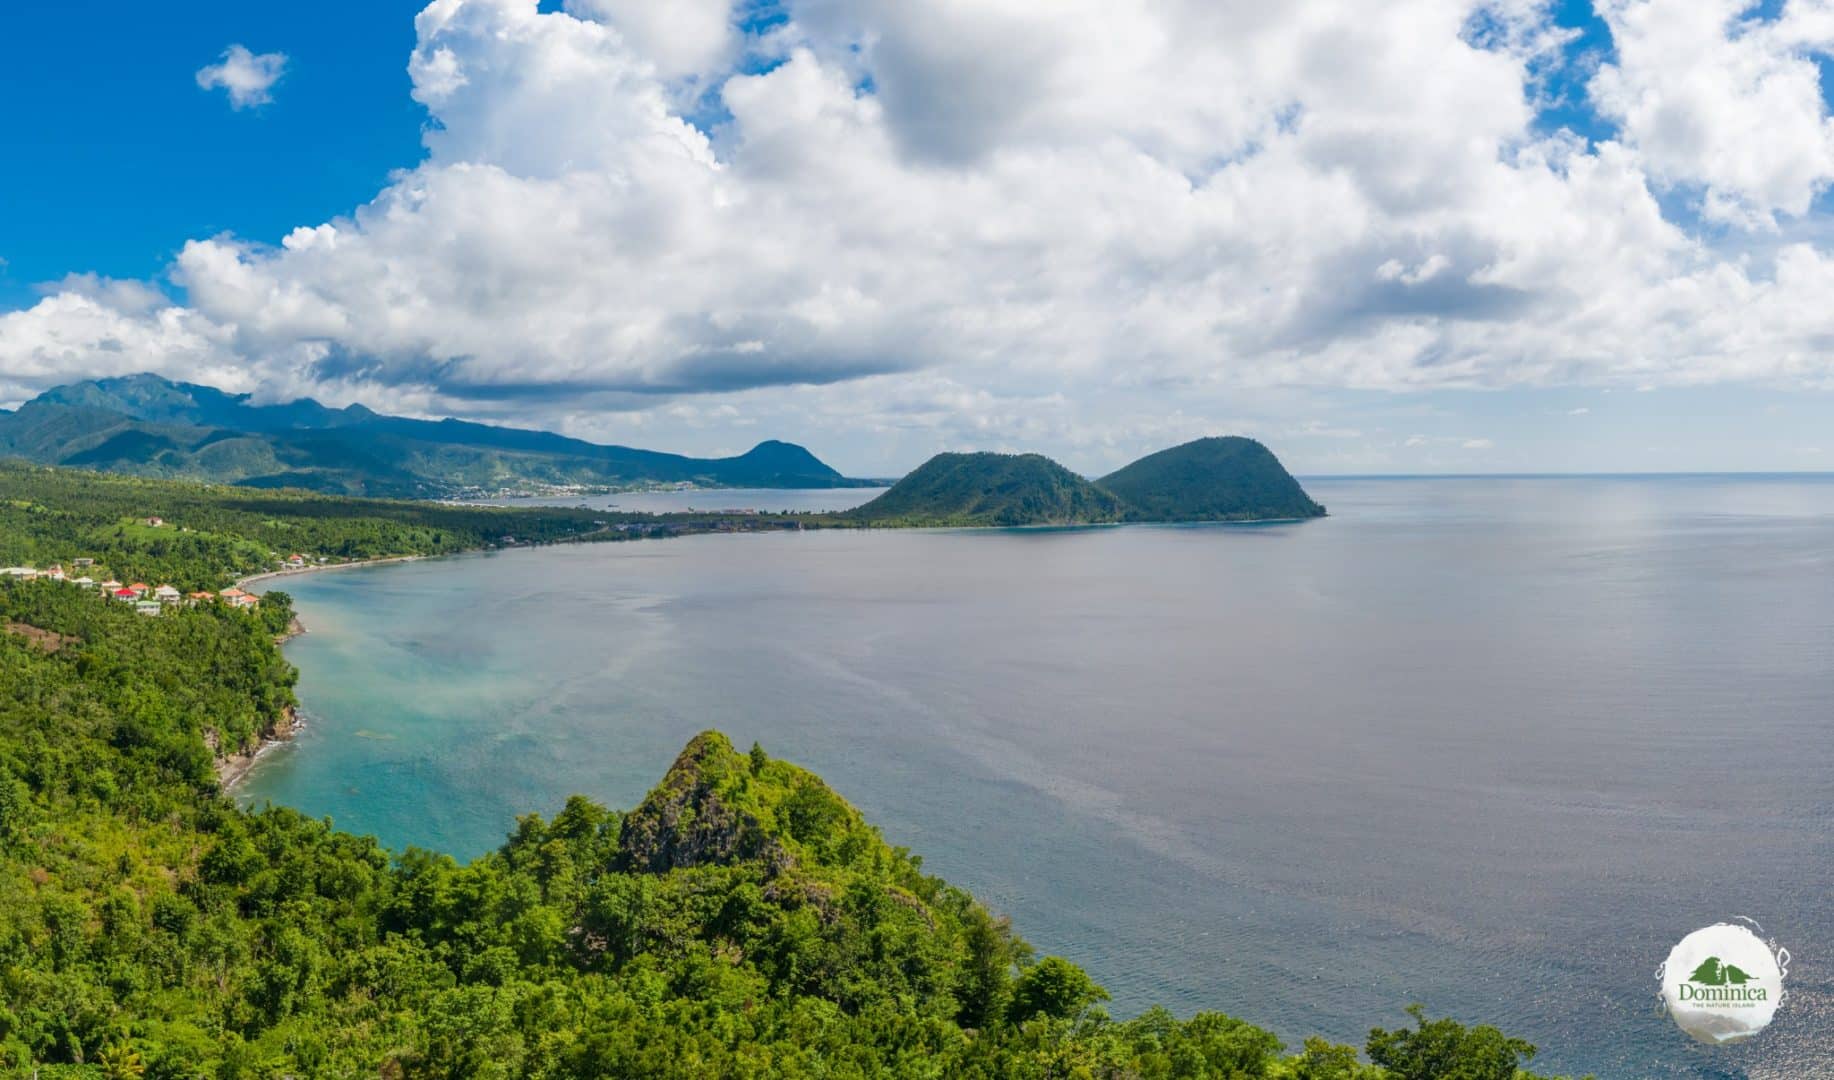 Cabrits view 加勒比視圖多米尼克介紹自然景觀Dominica, the Nature Island in Caribbean 加勒比的天然之島